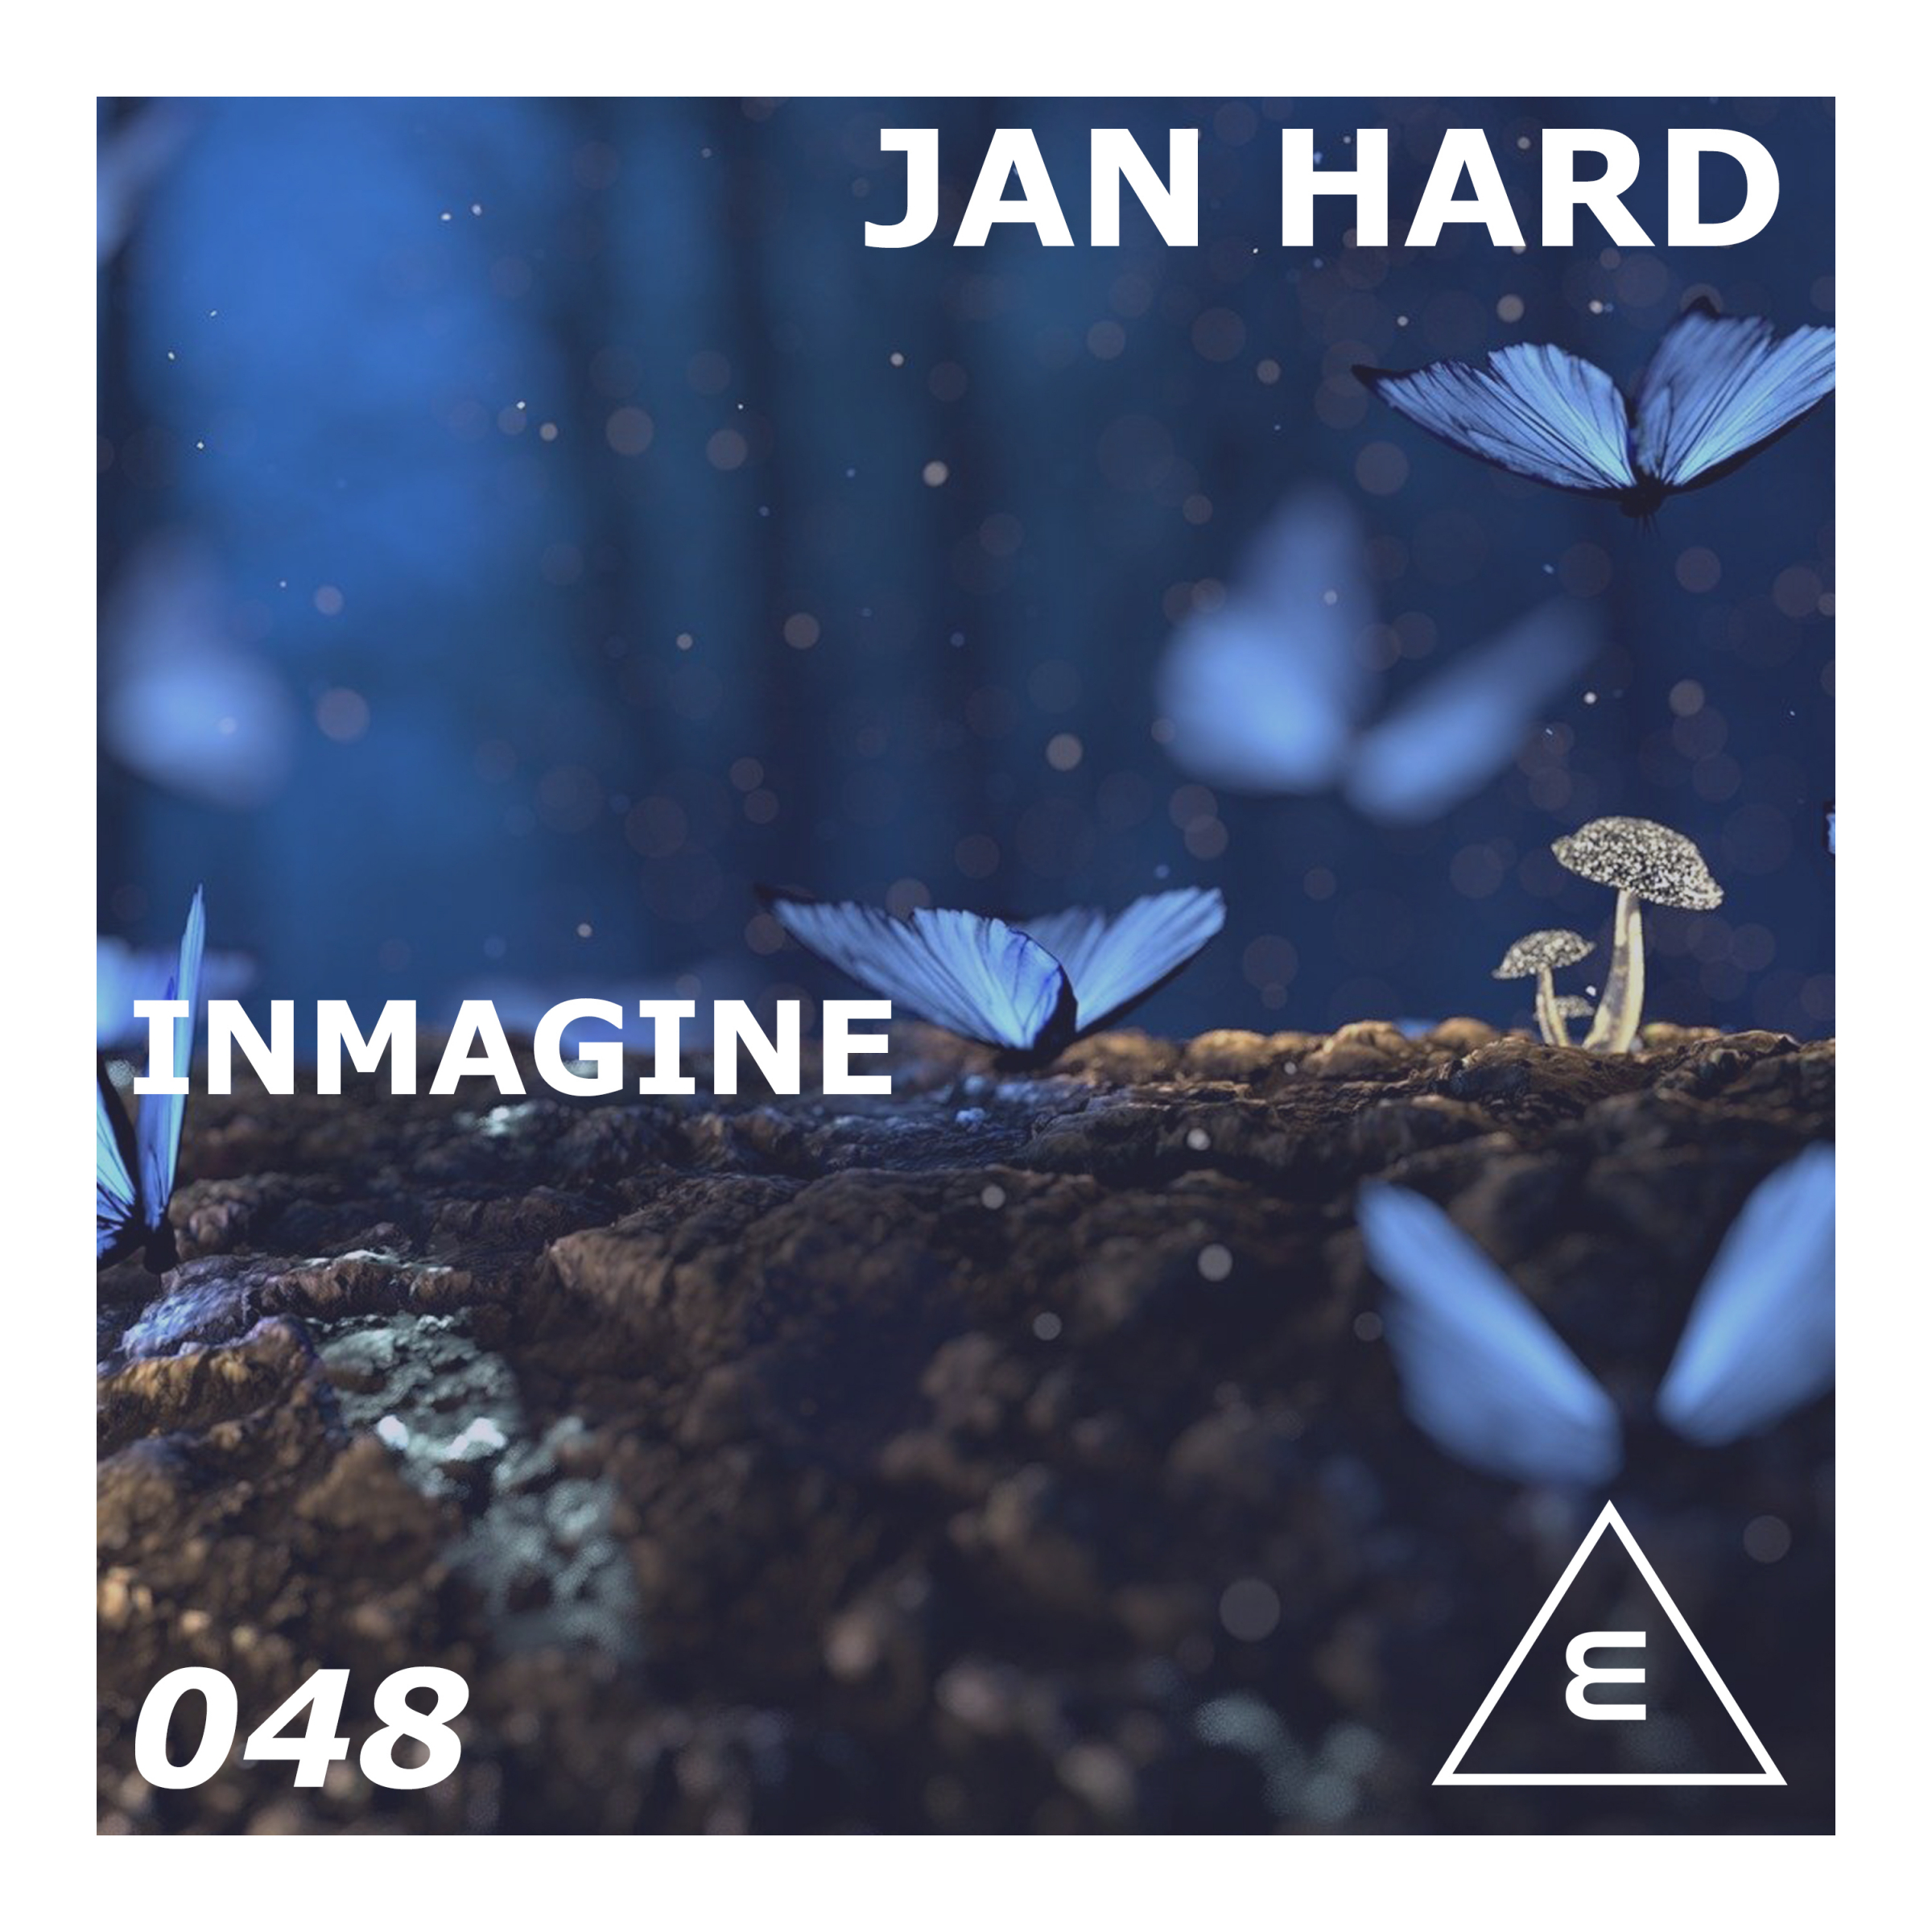 It s hard to imagine. Inmagine. Neal schon & Jan Hammer - 1981 - Untold passion album.